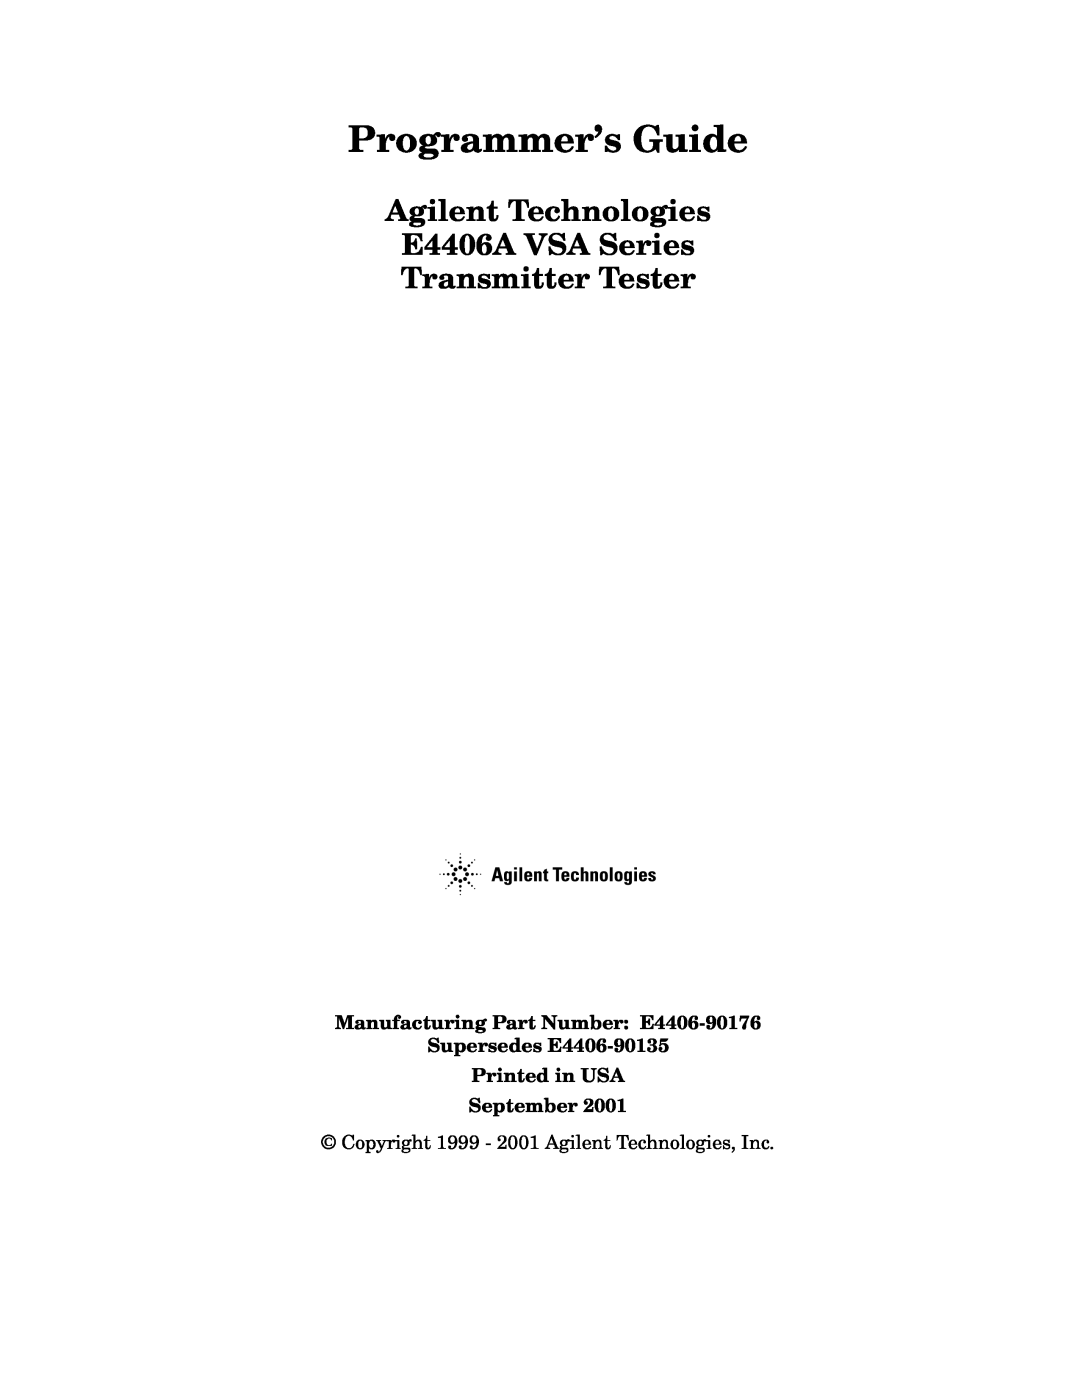 Agilent Technologies manual Programmer’s Guide, Agilent Technologies E4406A VSA Series, Transmitter Tester 